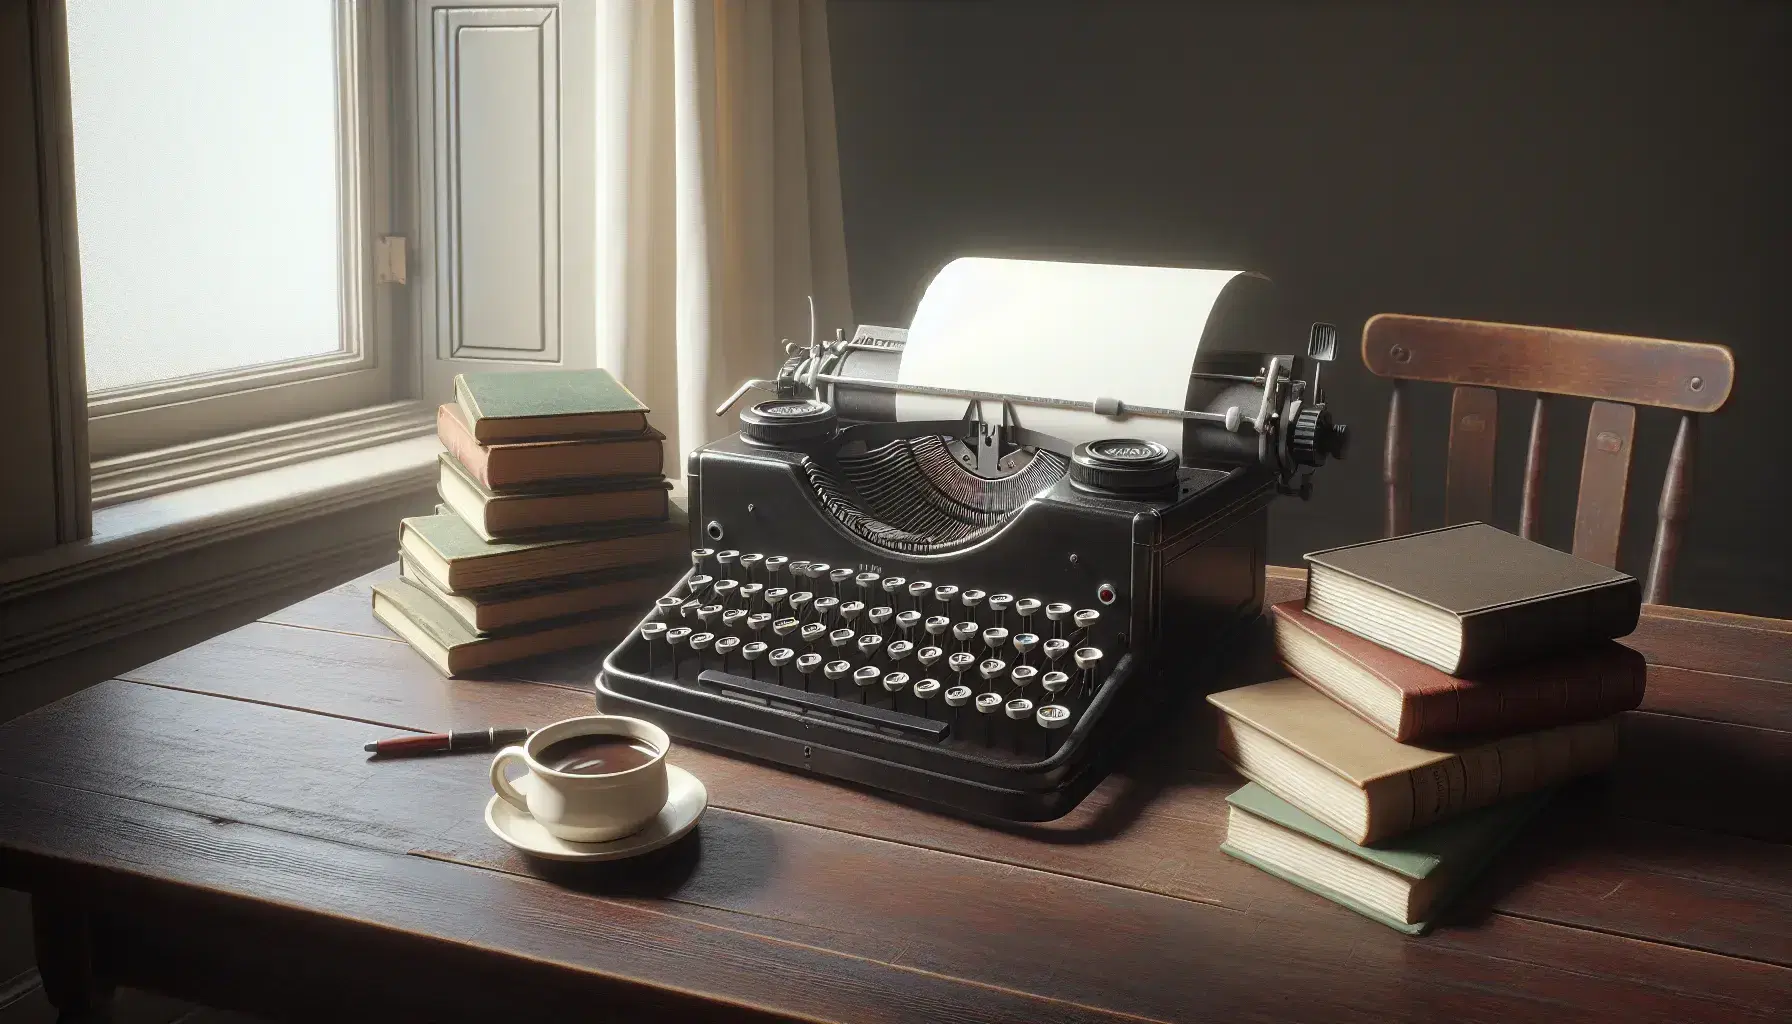 Máquina de escribir antigua con teclas redondas sobre mesa de madera oscura, papel insertado, taza de café al lado y libros apilados, luz suave de ventana con cortinas.